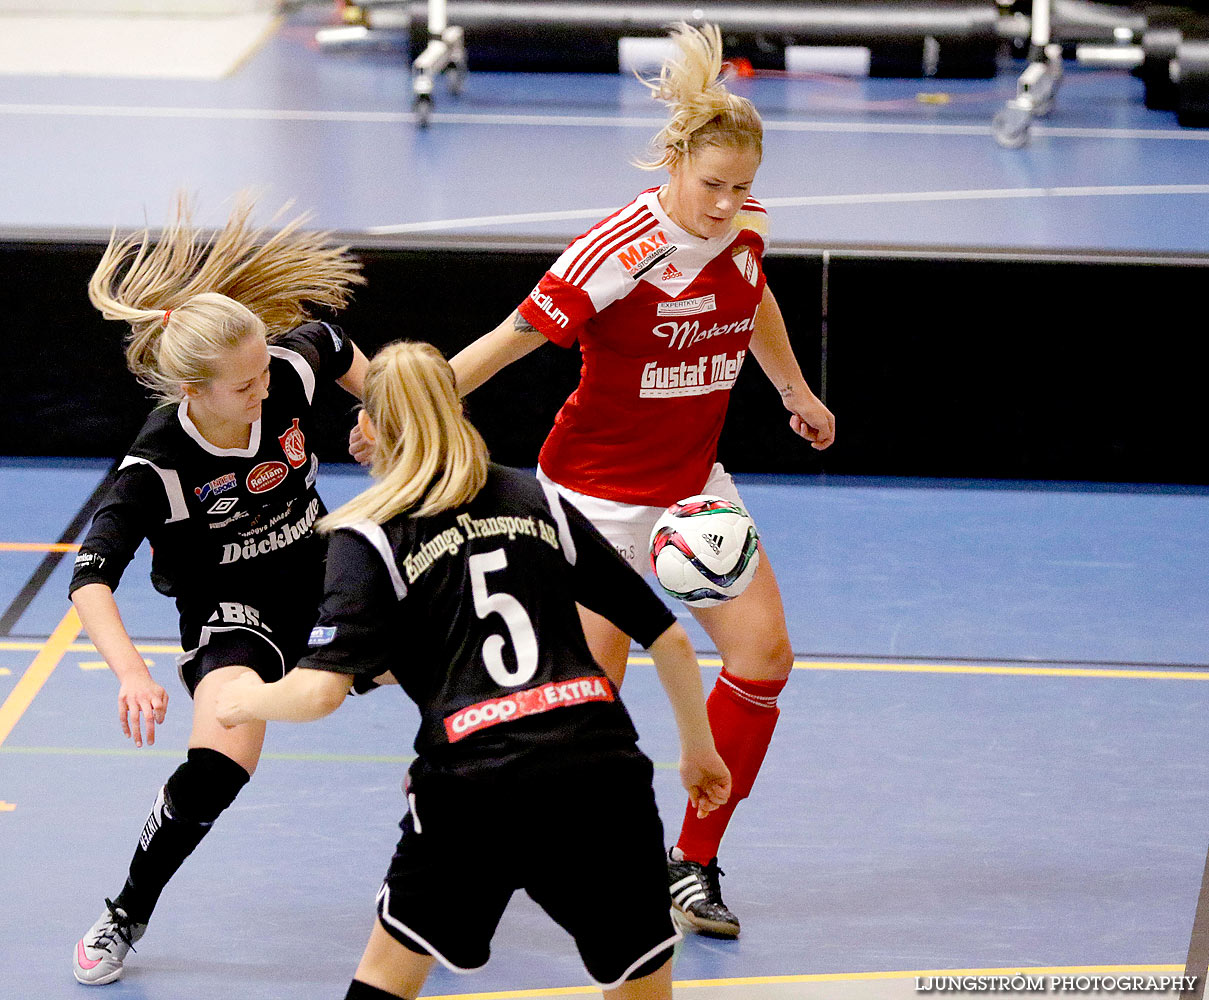 Futsal-DM Holmalunds IF-Falköpings KIK 2-2,dam,Åse-Vistehallen,Grästorp,Sverige,Futsal,,2015,127798